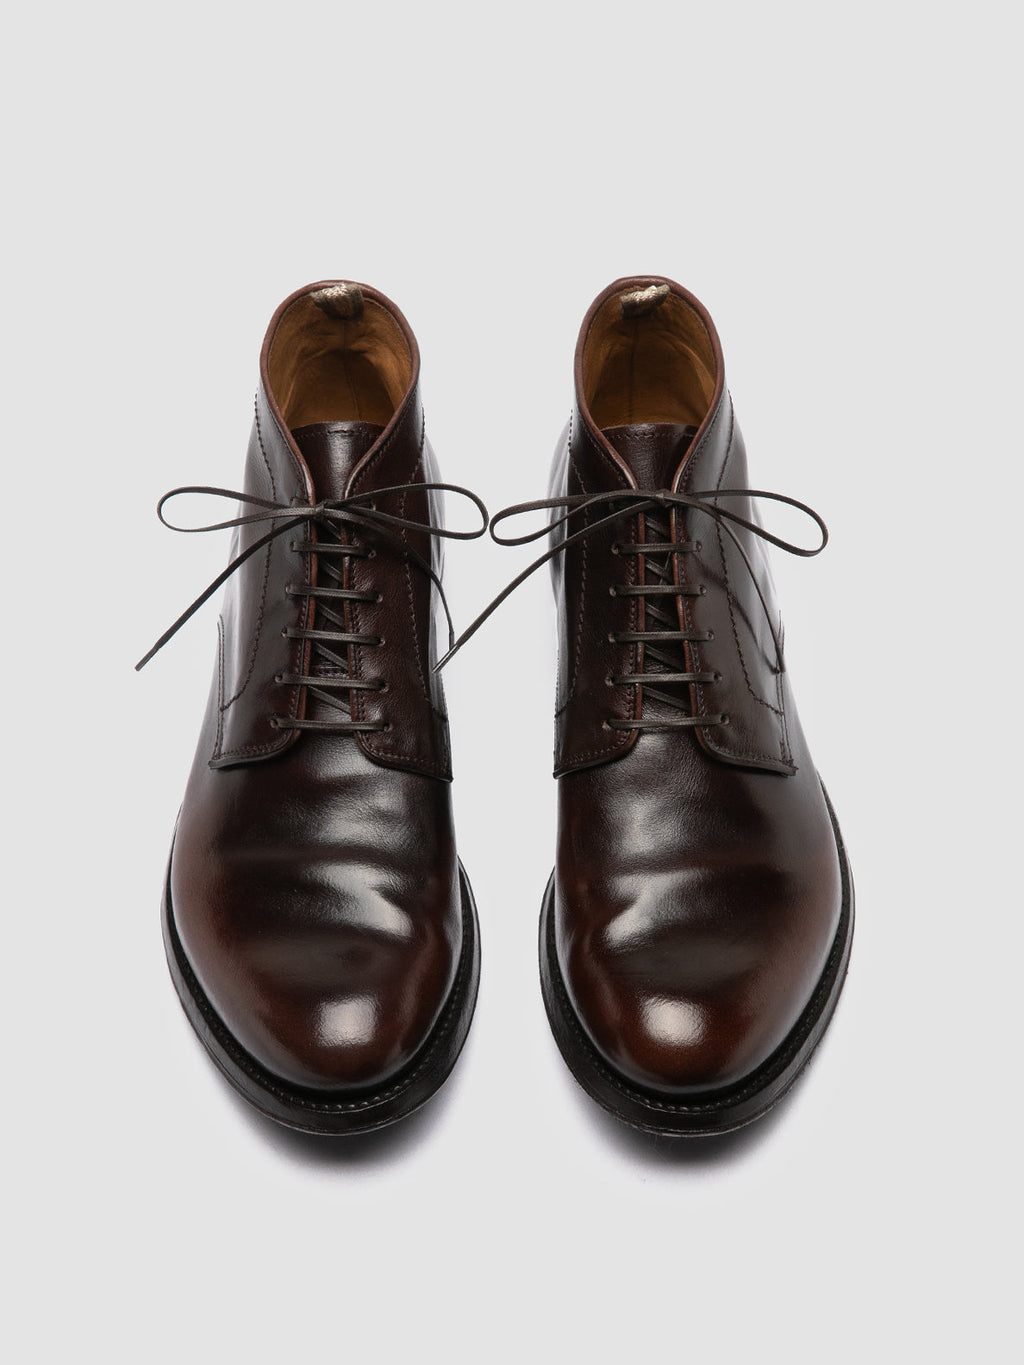 ANATOMIA 88 - Brown Leather Chukka Boots Men Officine Creative - 2